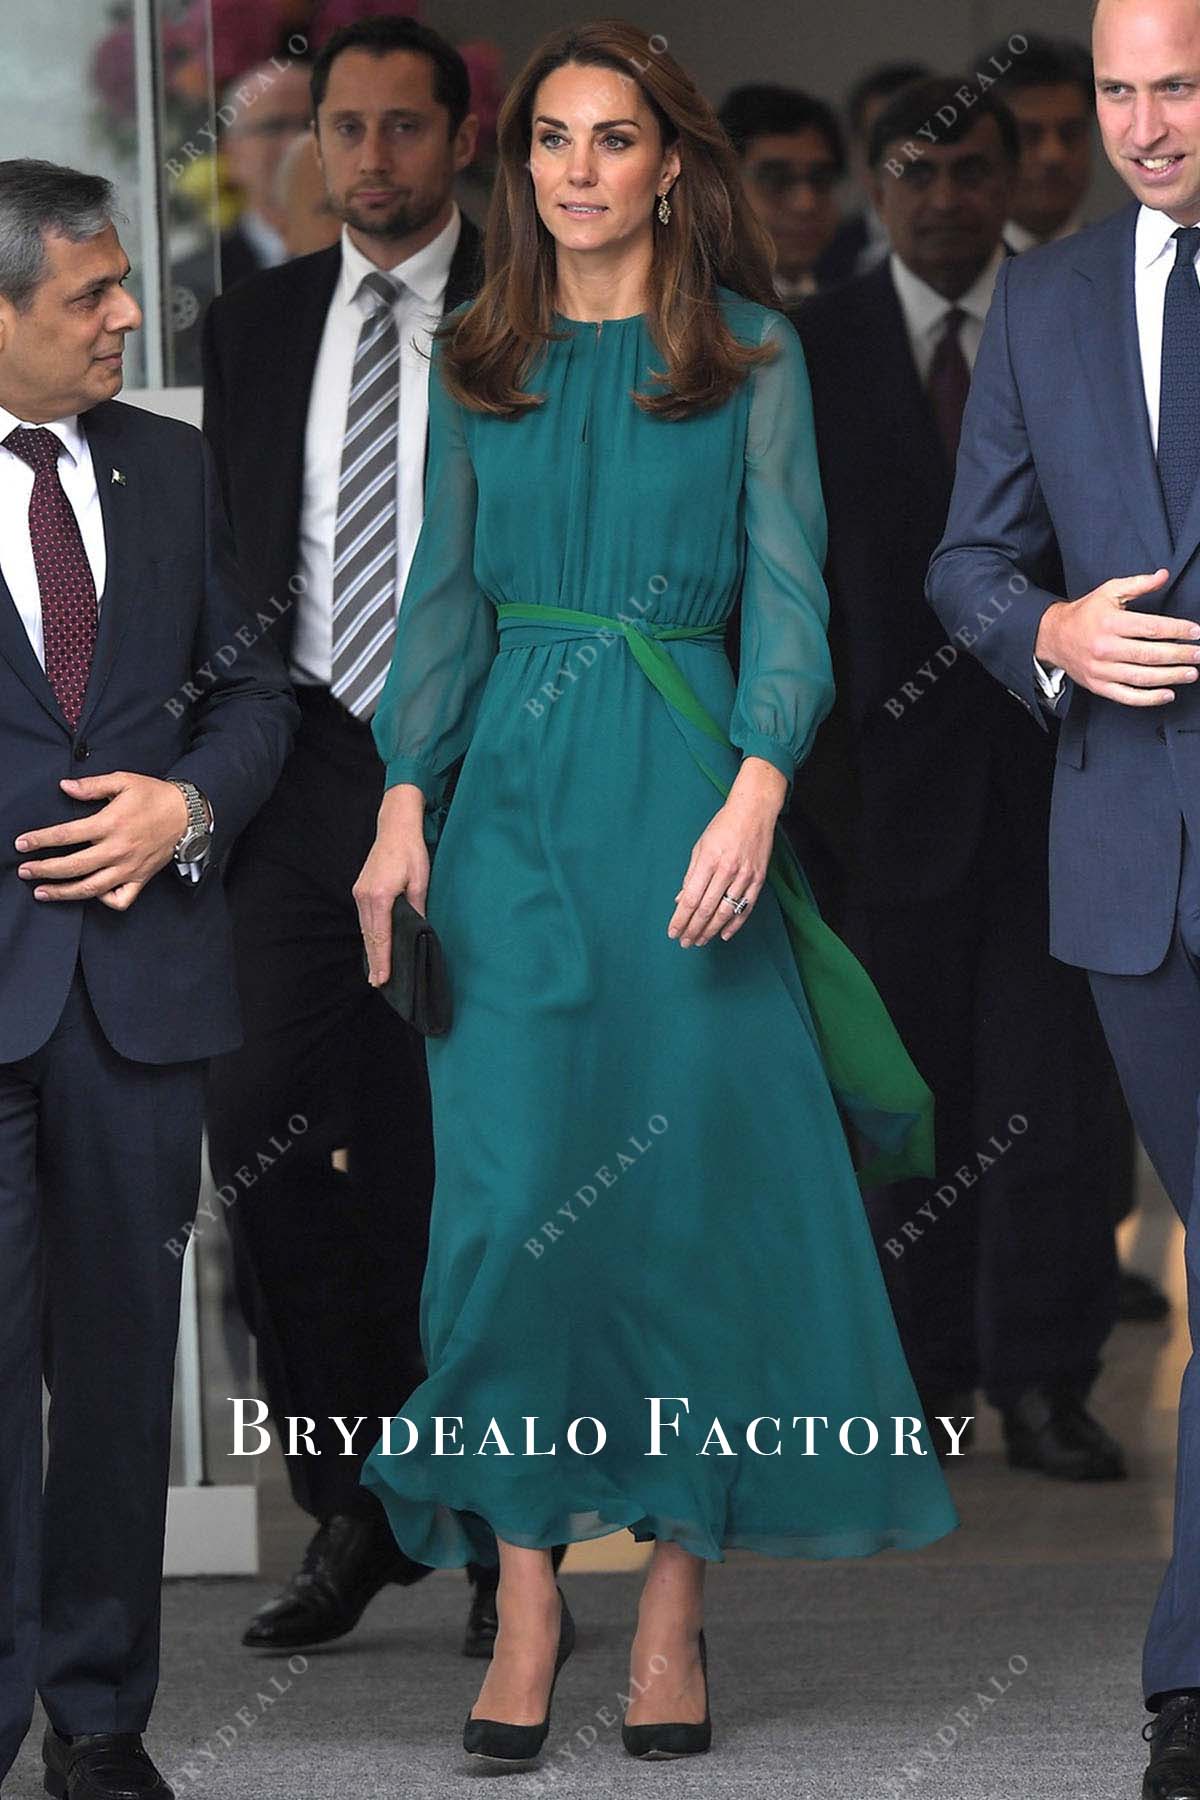 Kate Middleton Teal Maxi Dress Aga Khan Centre Visit 2019